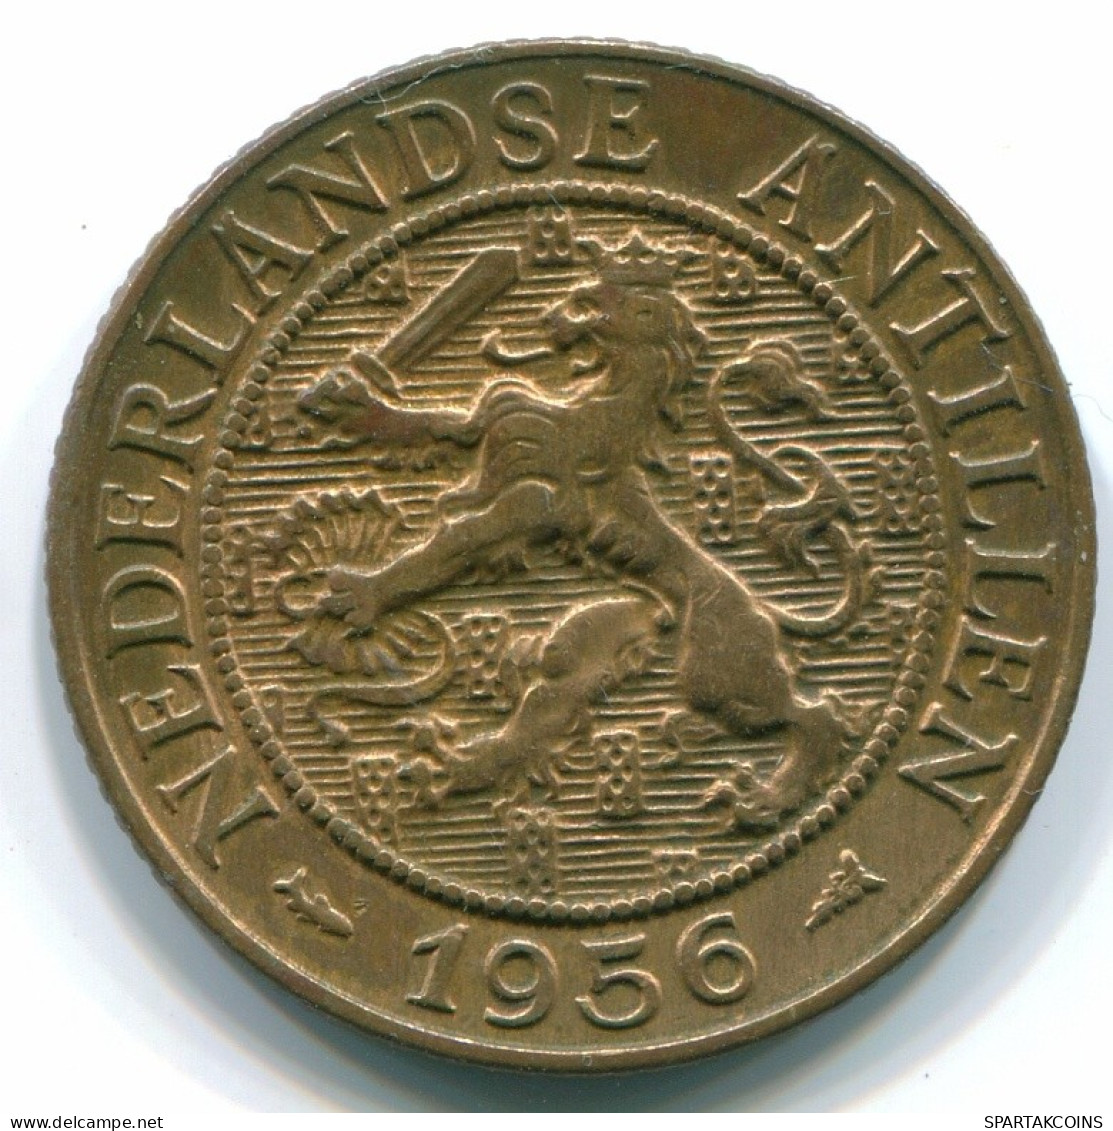 2 1/2 CENT 1956 CURACAO Netherlands Bronze Colonial Coin #S10174.U.A - Curaçao